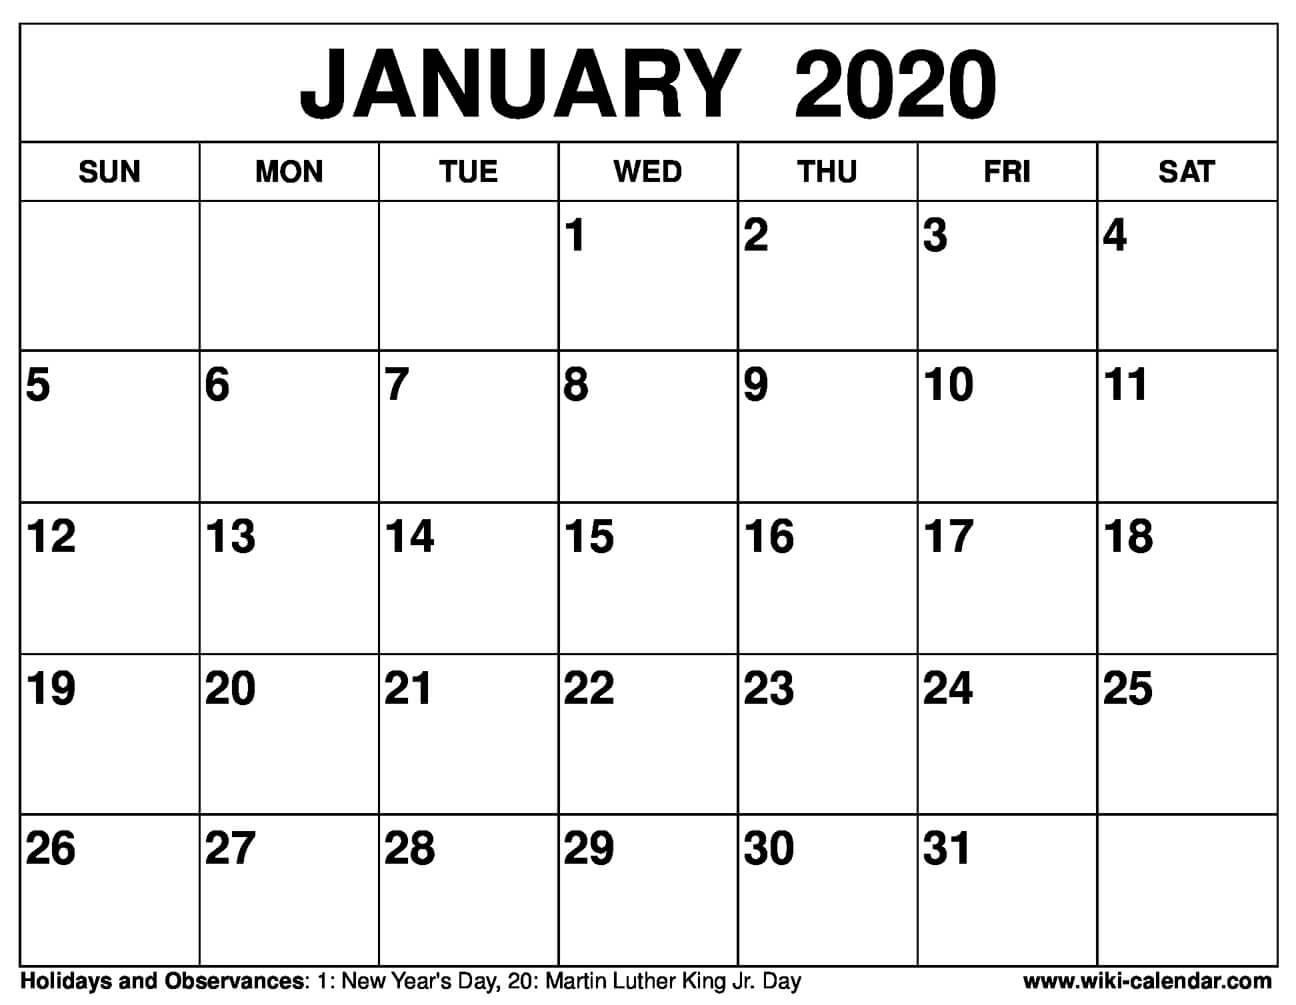 Free Printable January 2021 Calendars